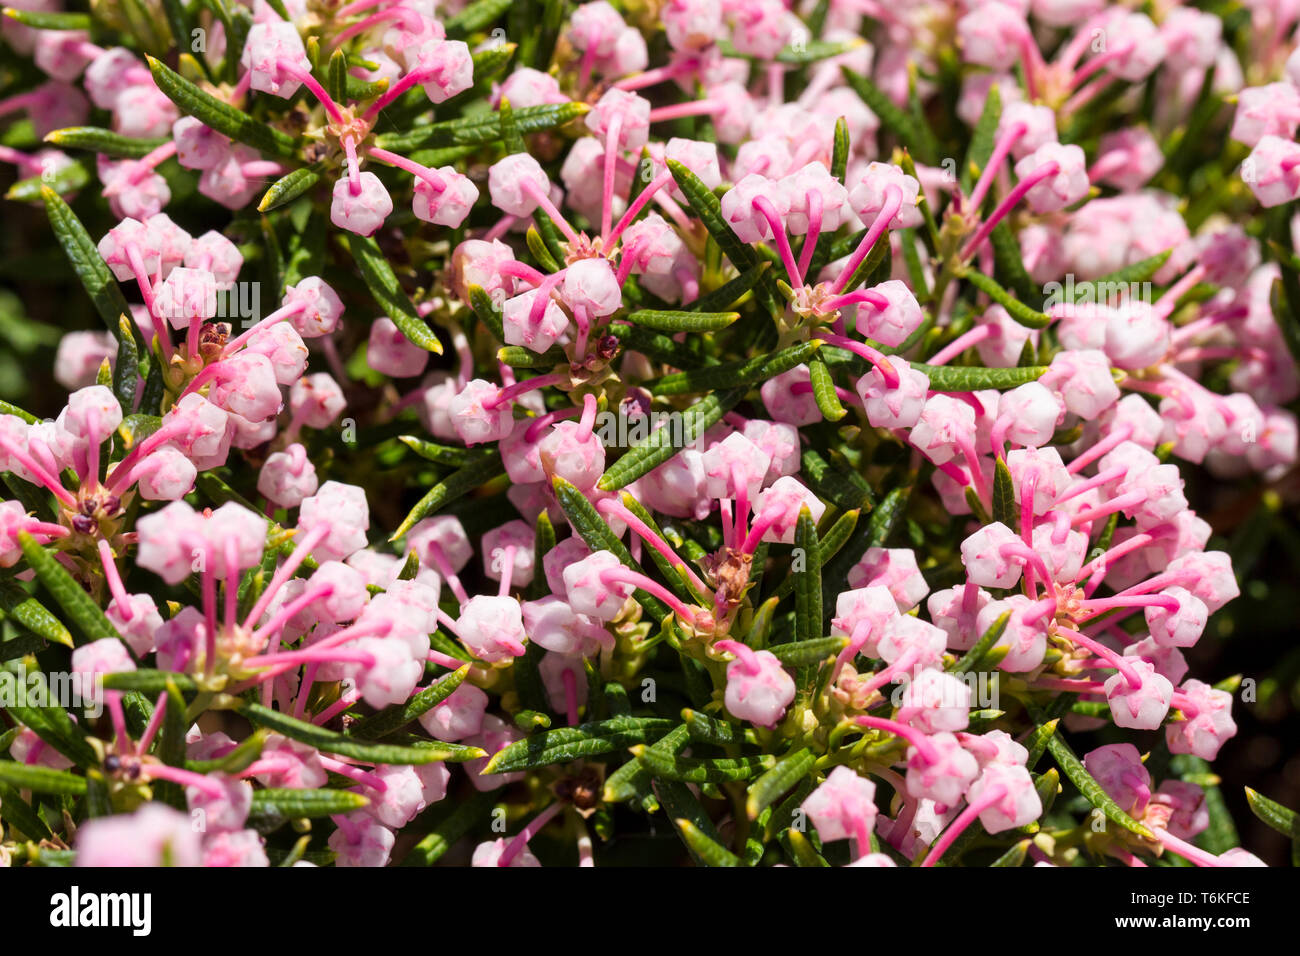 Andromeda polifolia Nikko shrub plant flowering in springtime, England, United Kingdom Stock Photo